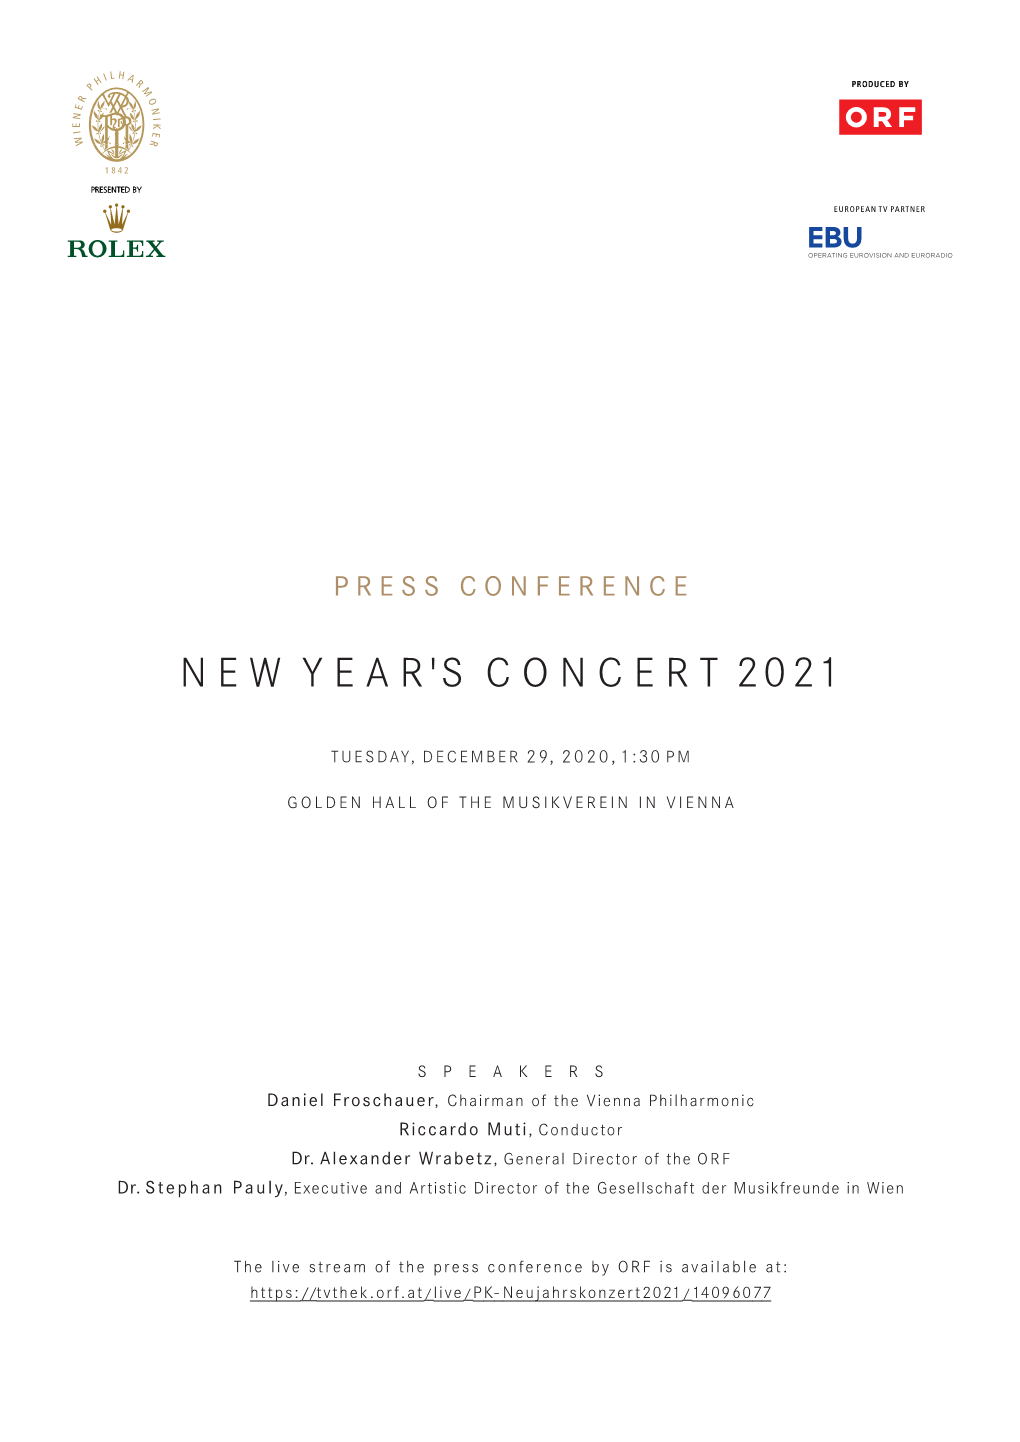 New Year's Concert 2021 Via Live Stream Across Austria